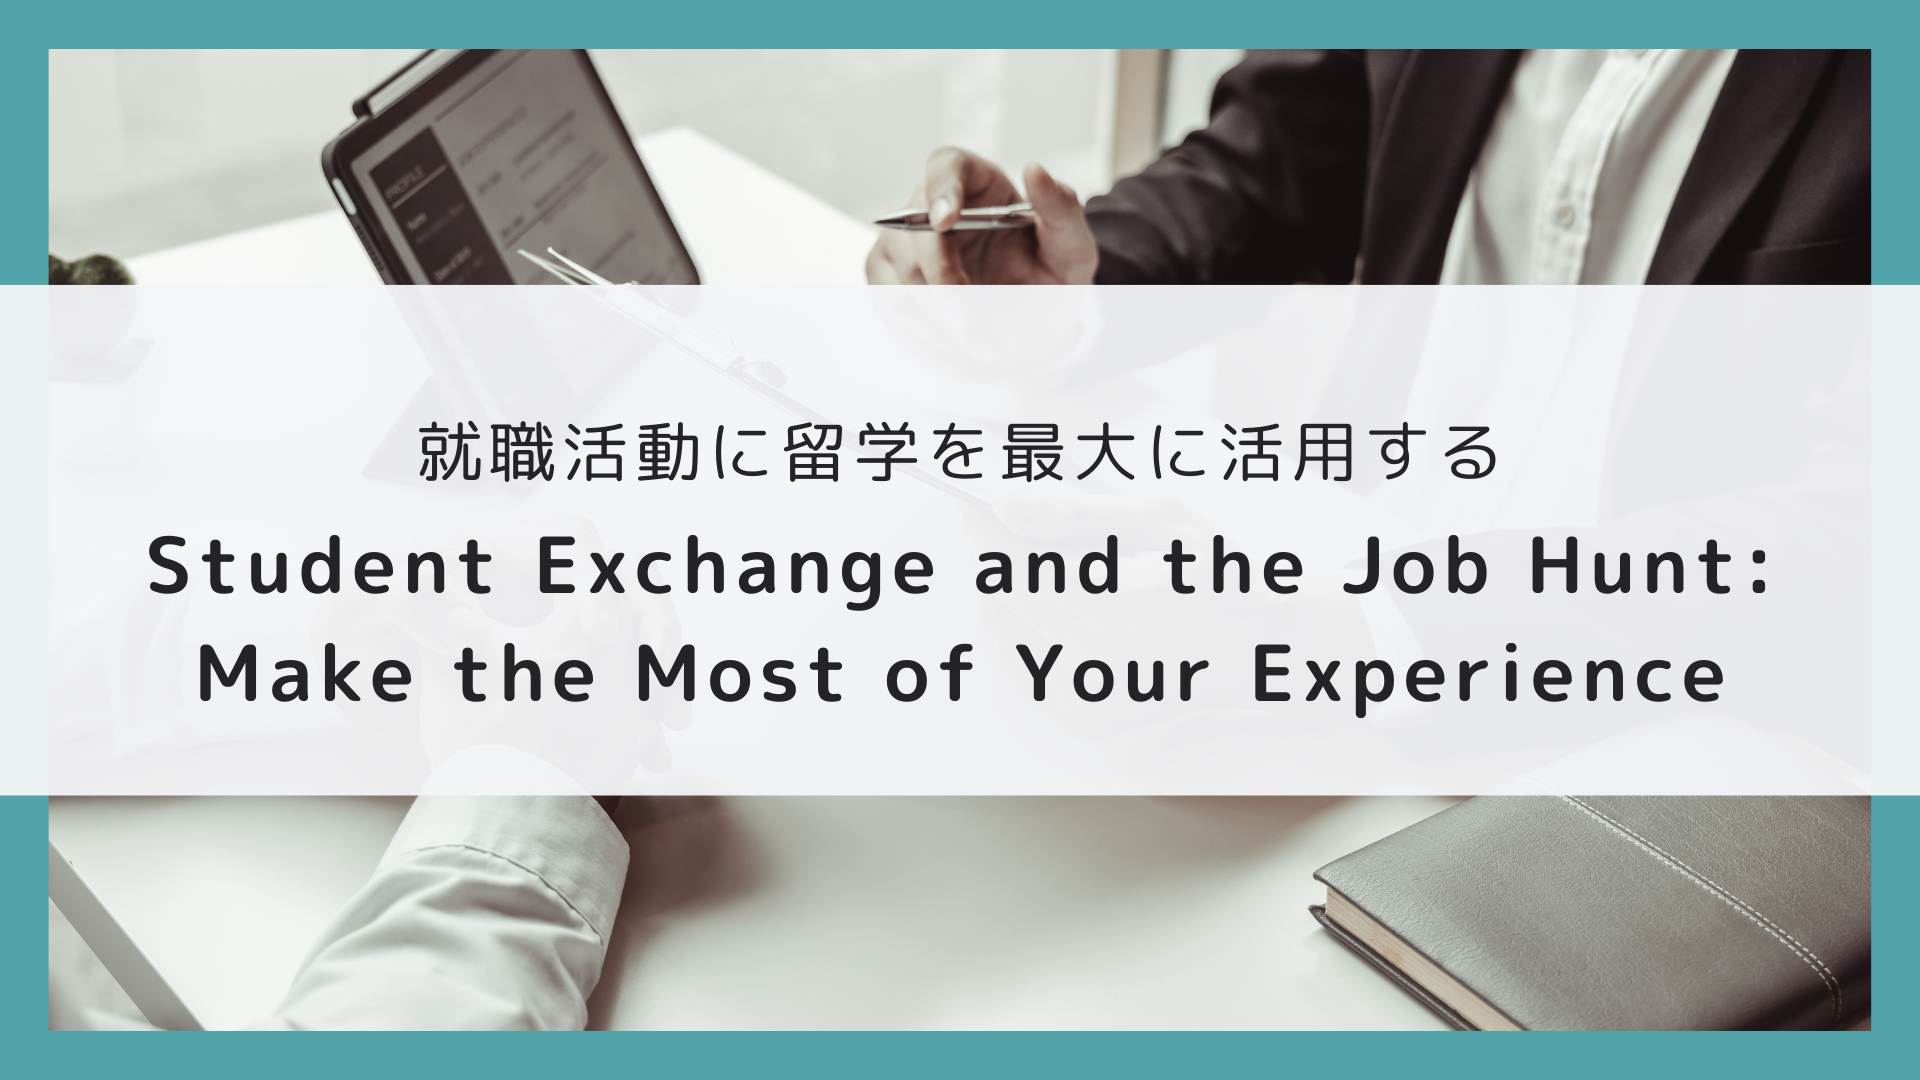 Student Exchange and the Job Hunt